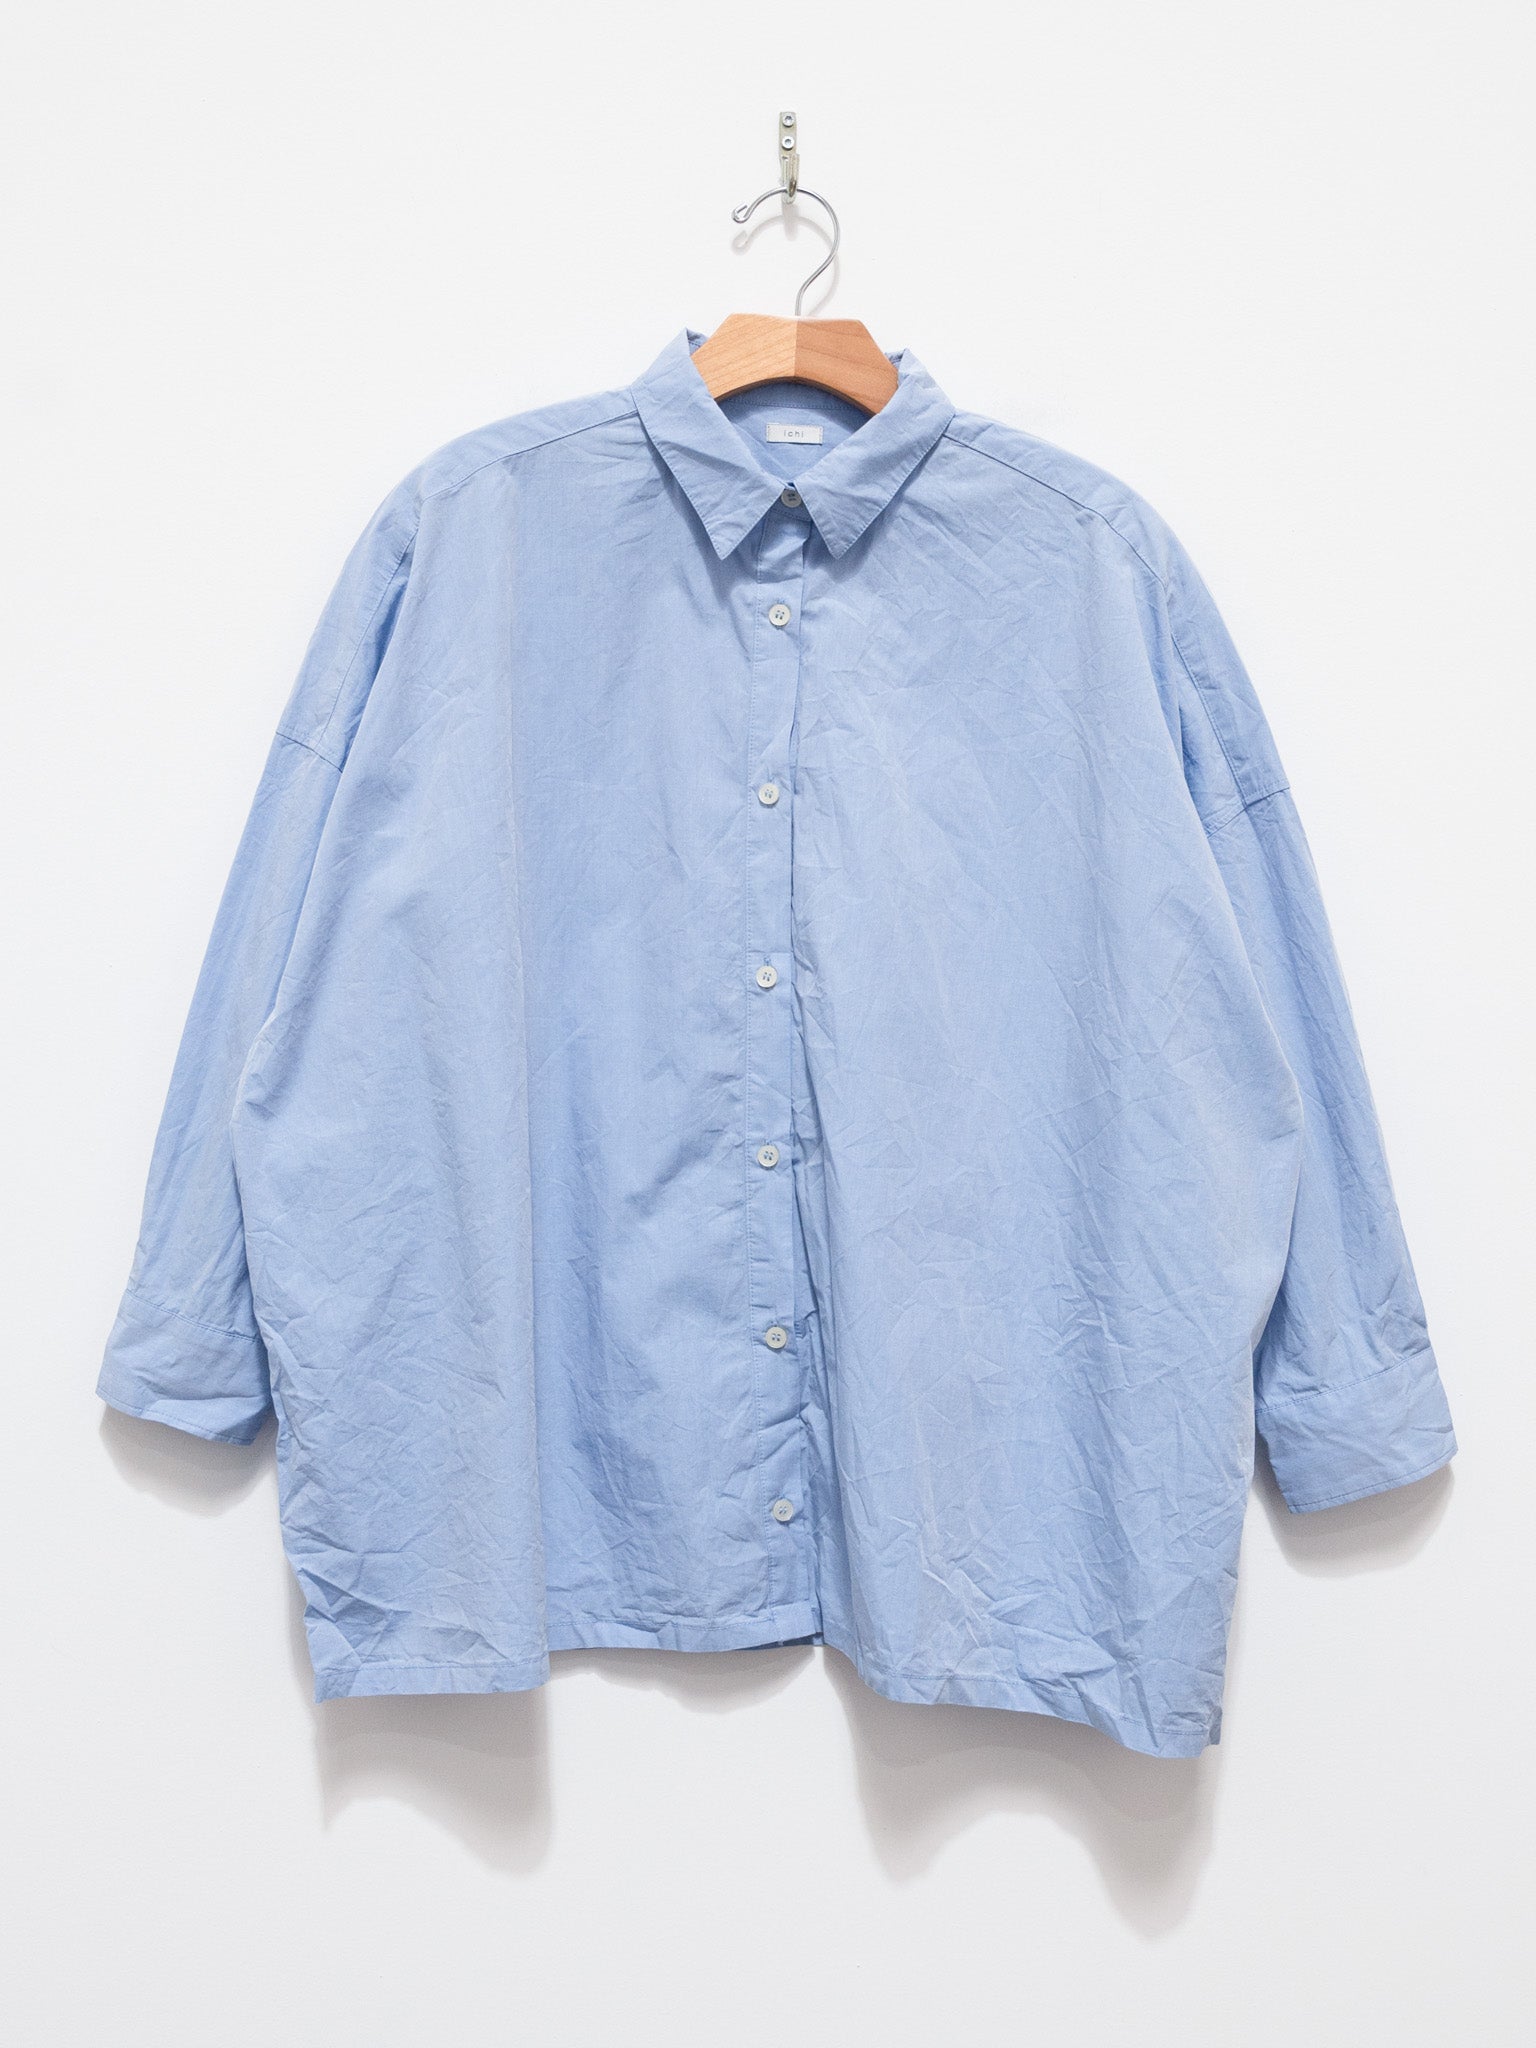 Namu Shop - ICHI Washer BD Shirt - Light Blue